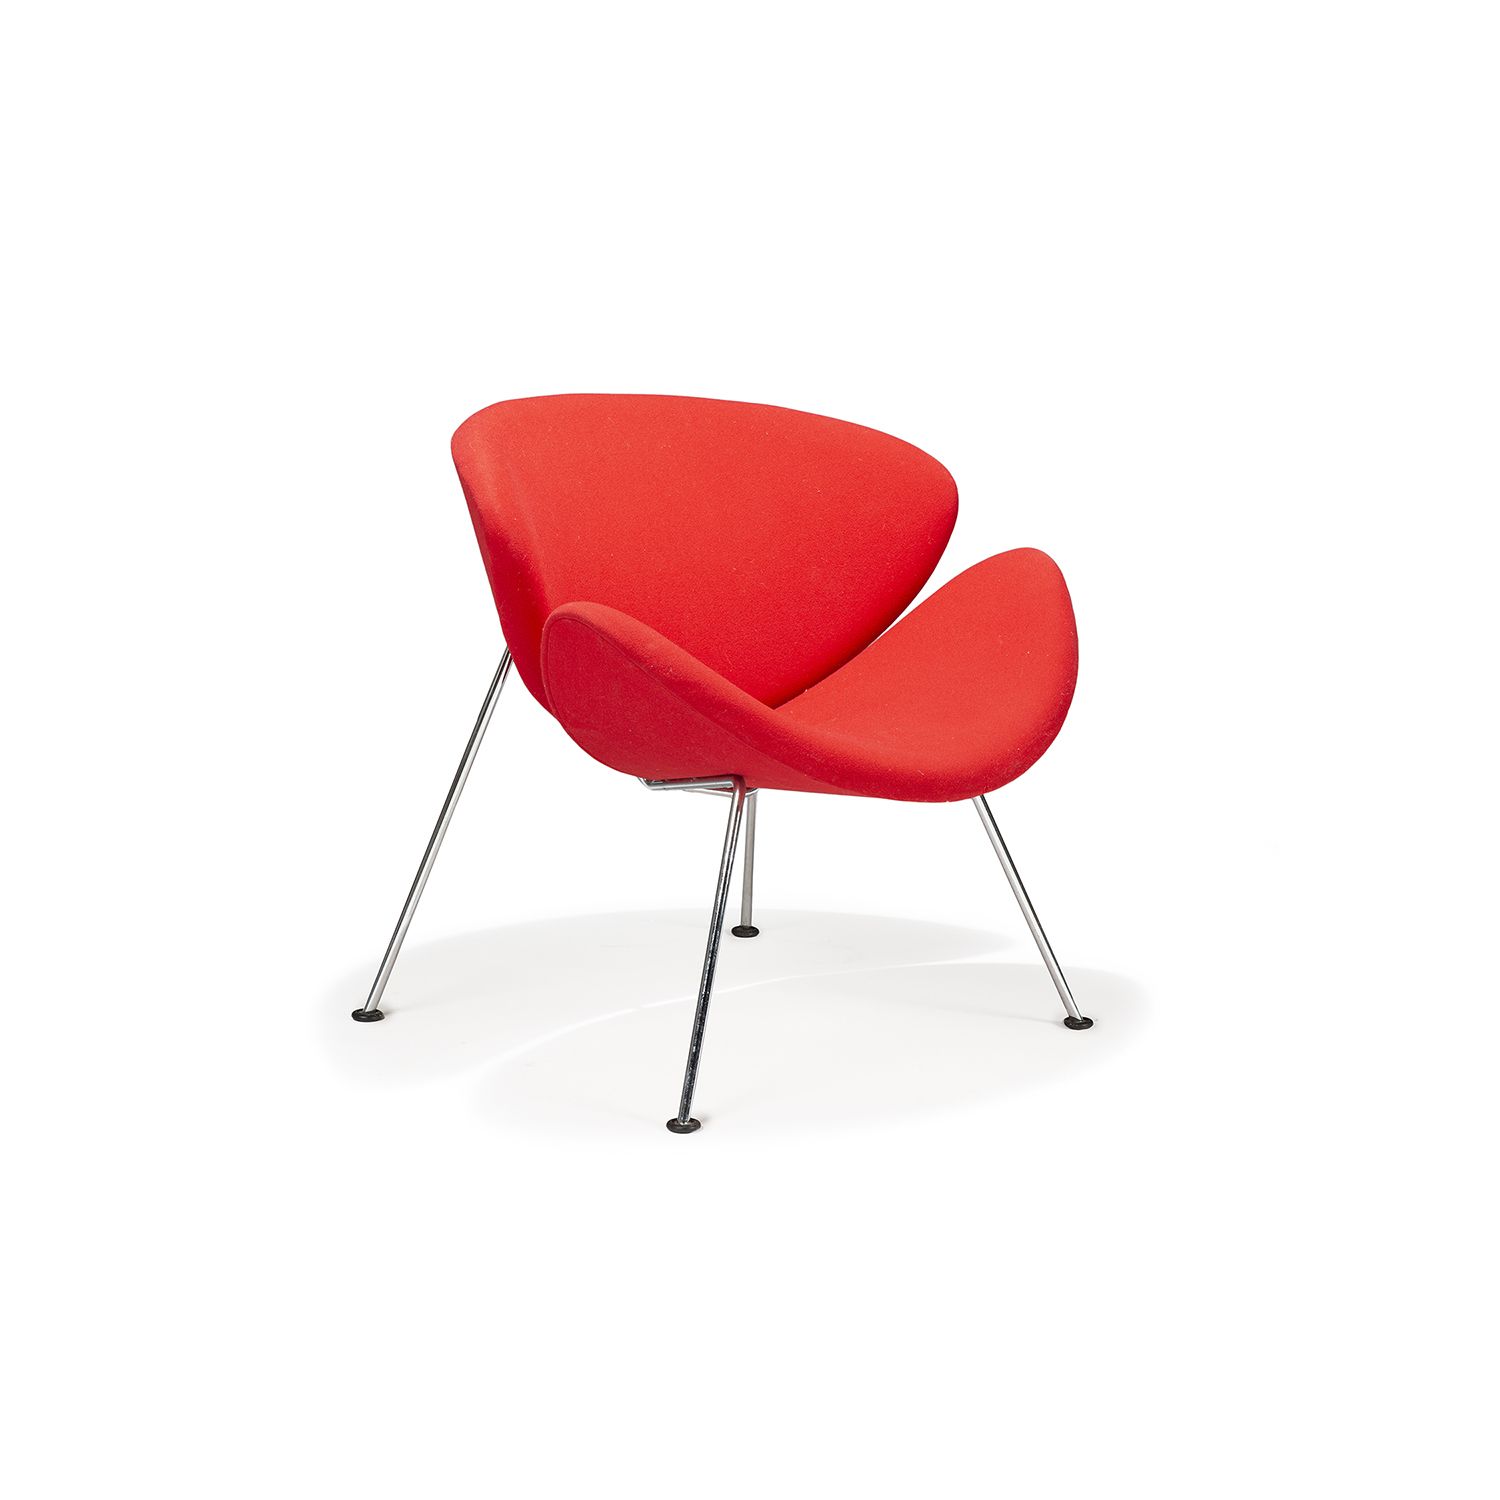 Null 皮埃尔-保林(1927-2009)

一把 "F437 "或 "橙色切片 "扶手椅，设计于1960年，钢脚，木质结构热成型，分为两部分，用红色羊毛织物&hellip;